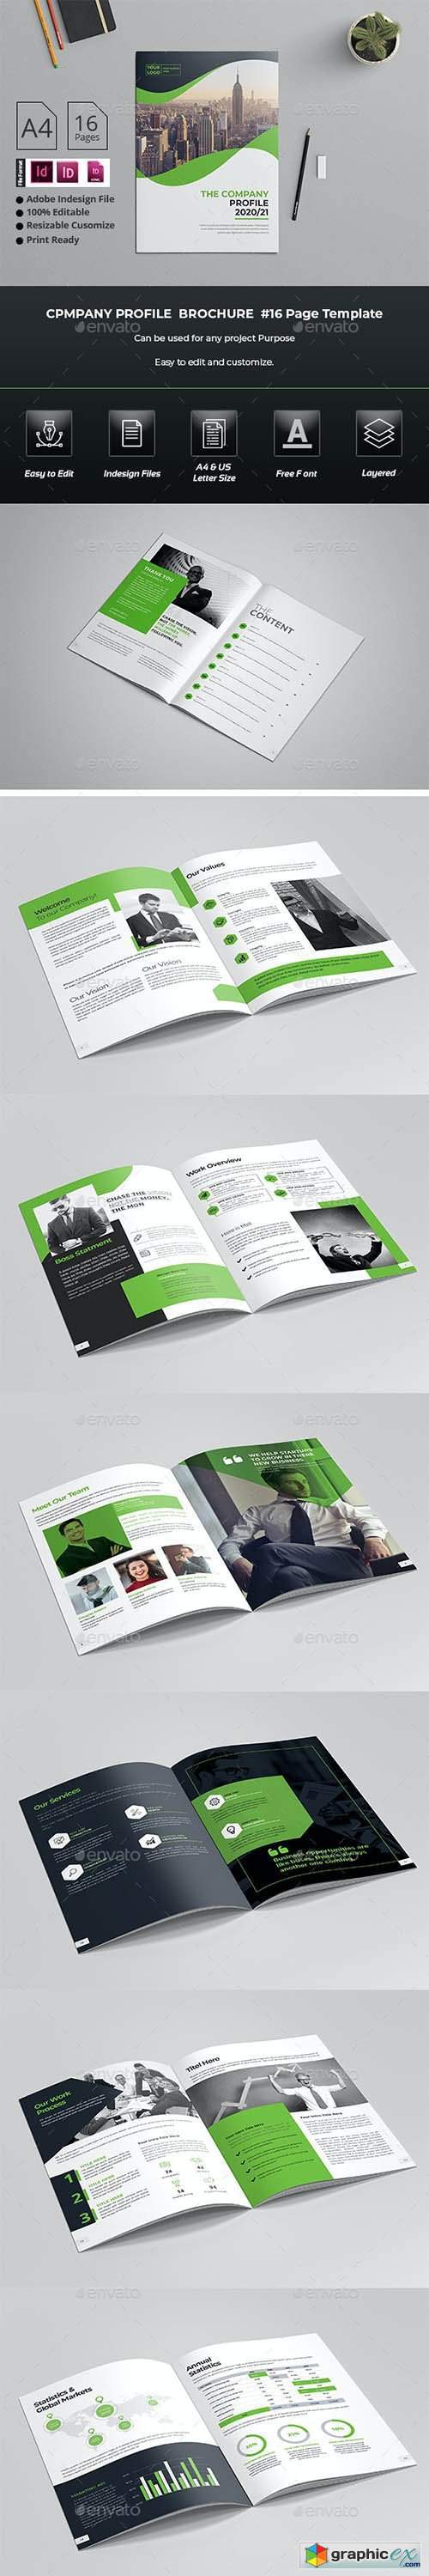 Company Profile Brochure Indesign Template